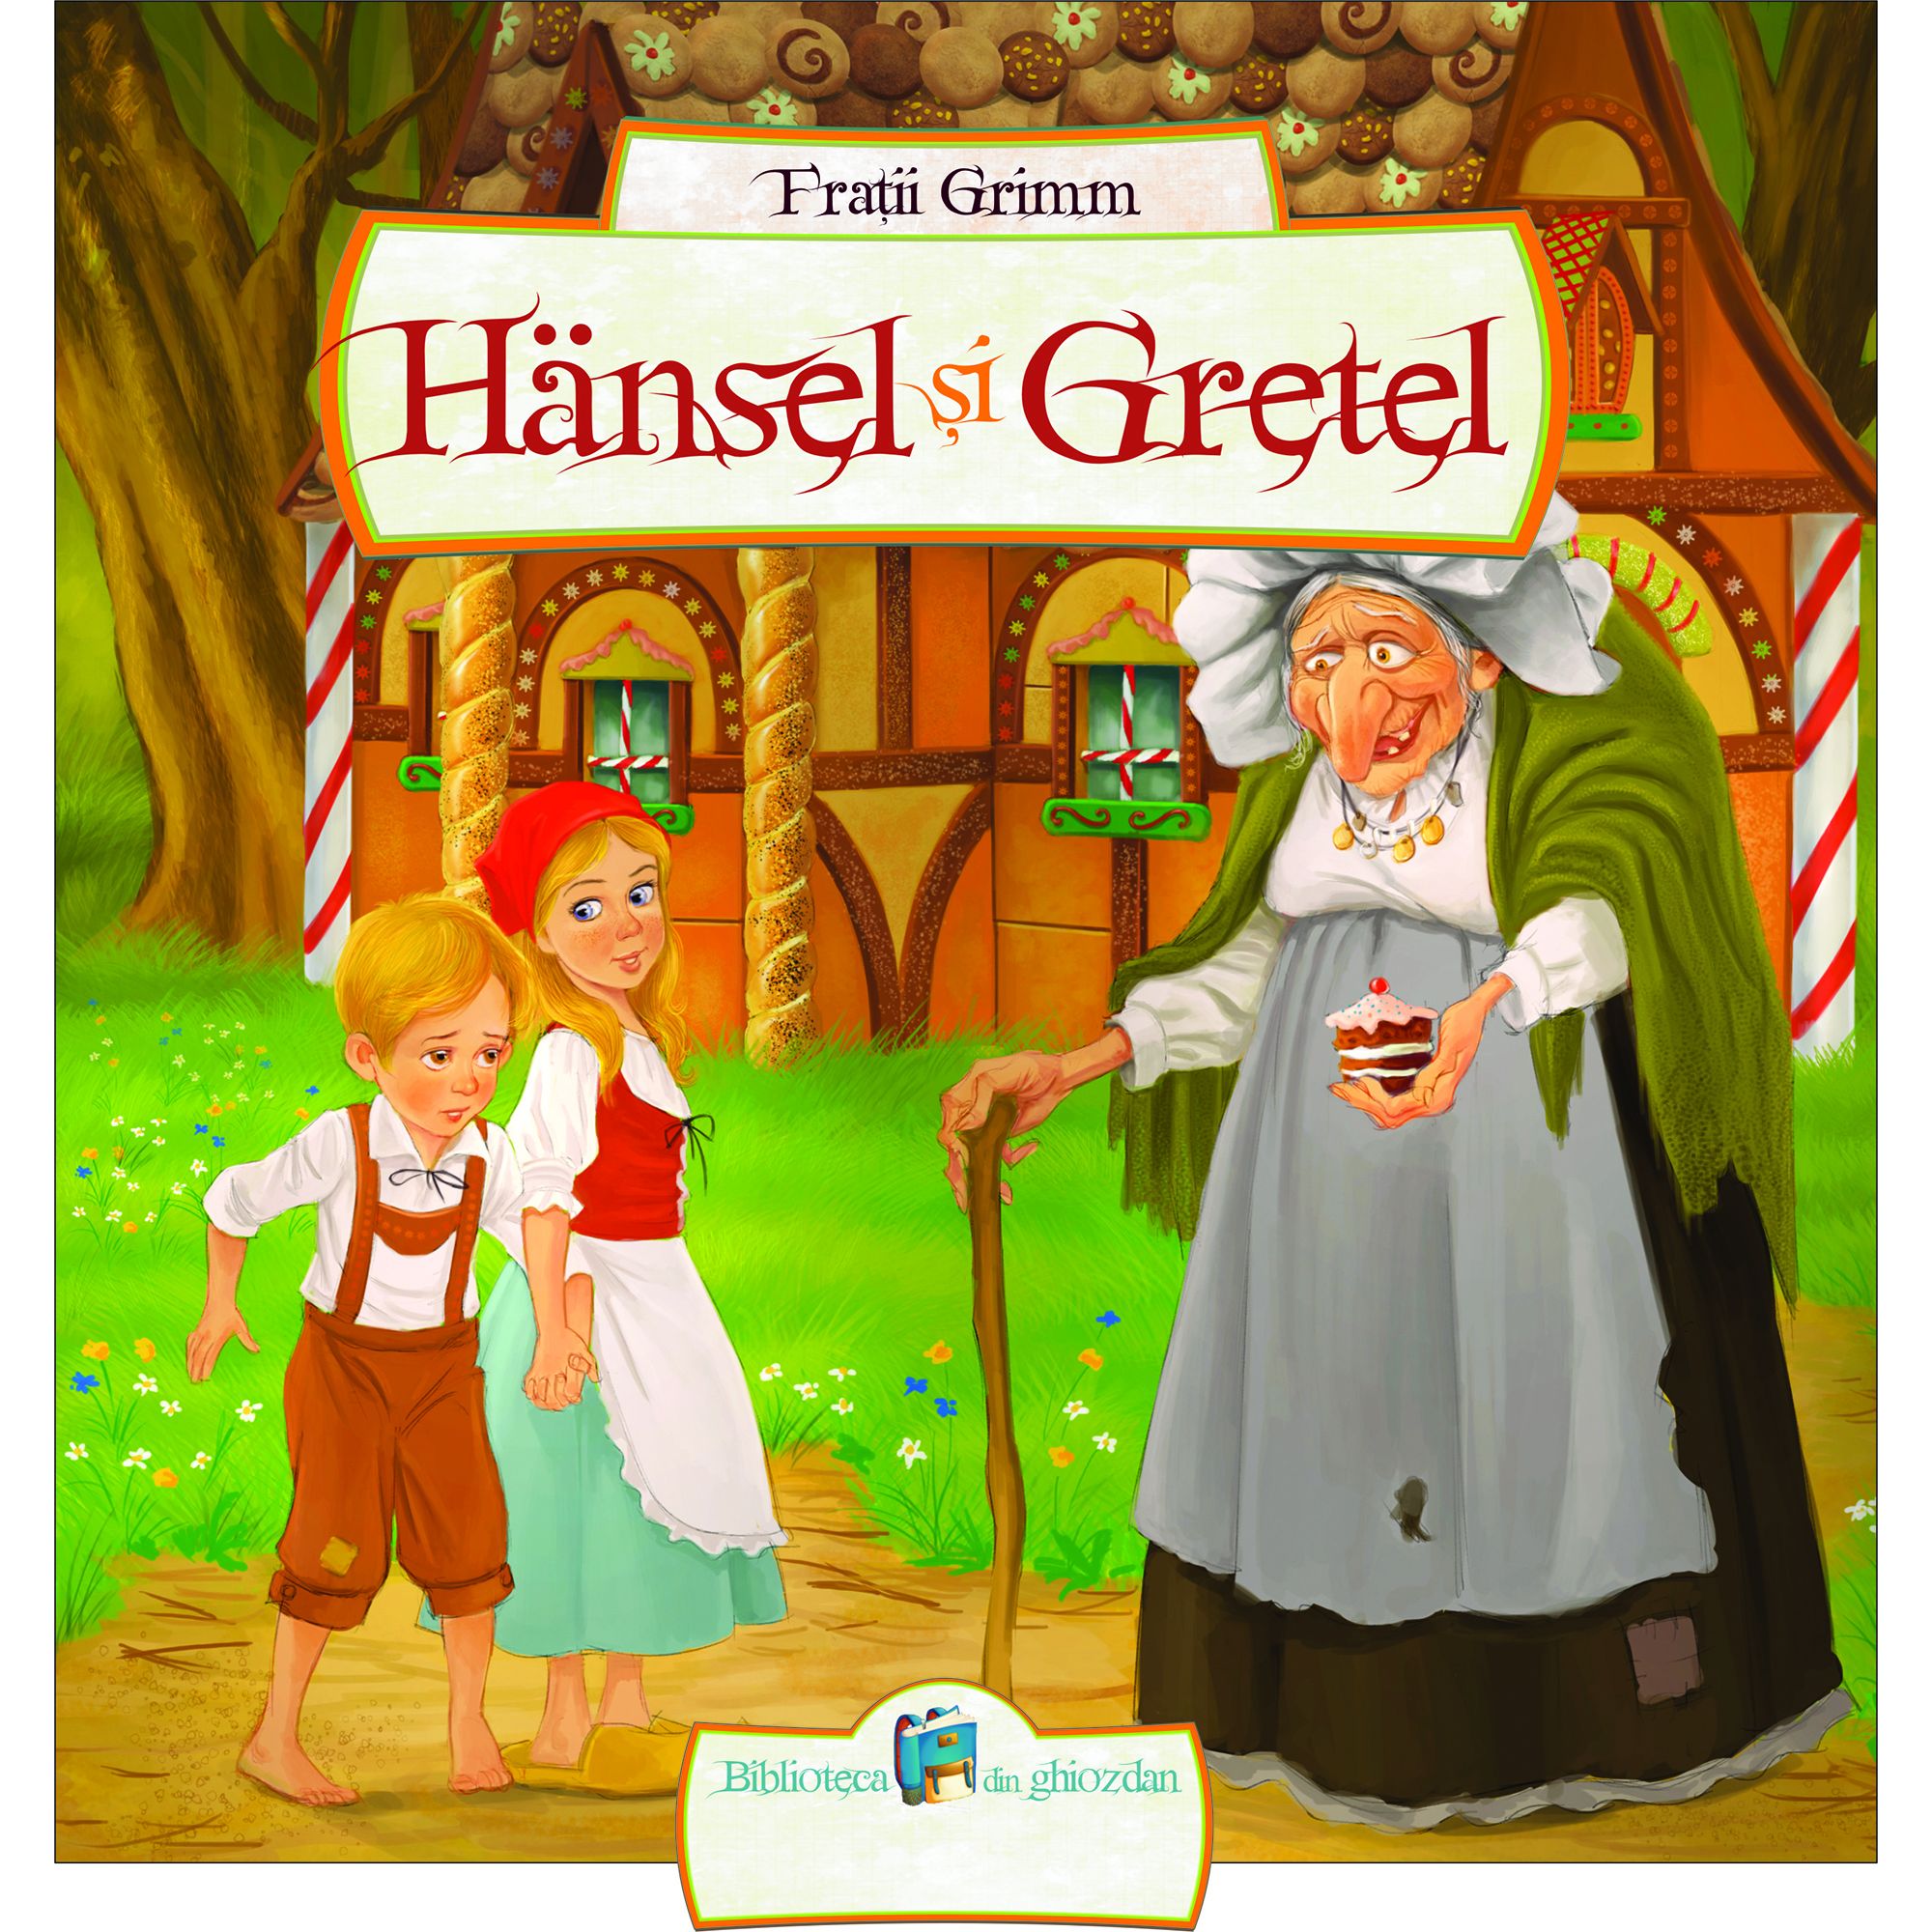 Hansel si Gretel | Fratii Grimm ALL